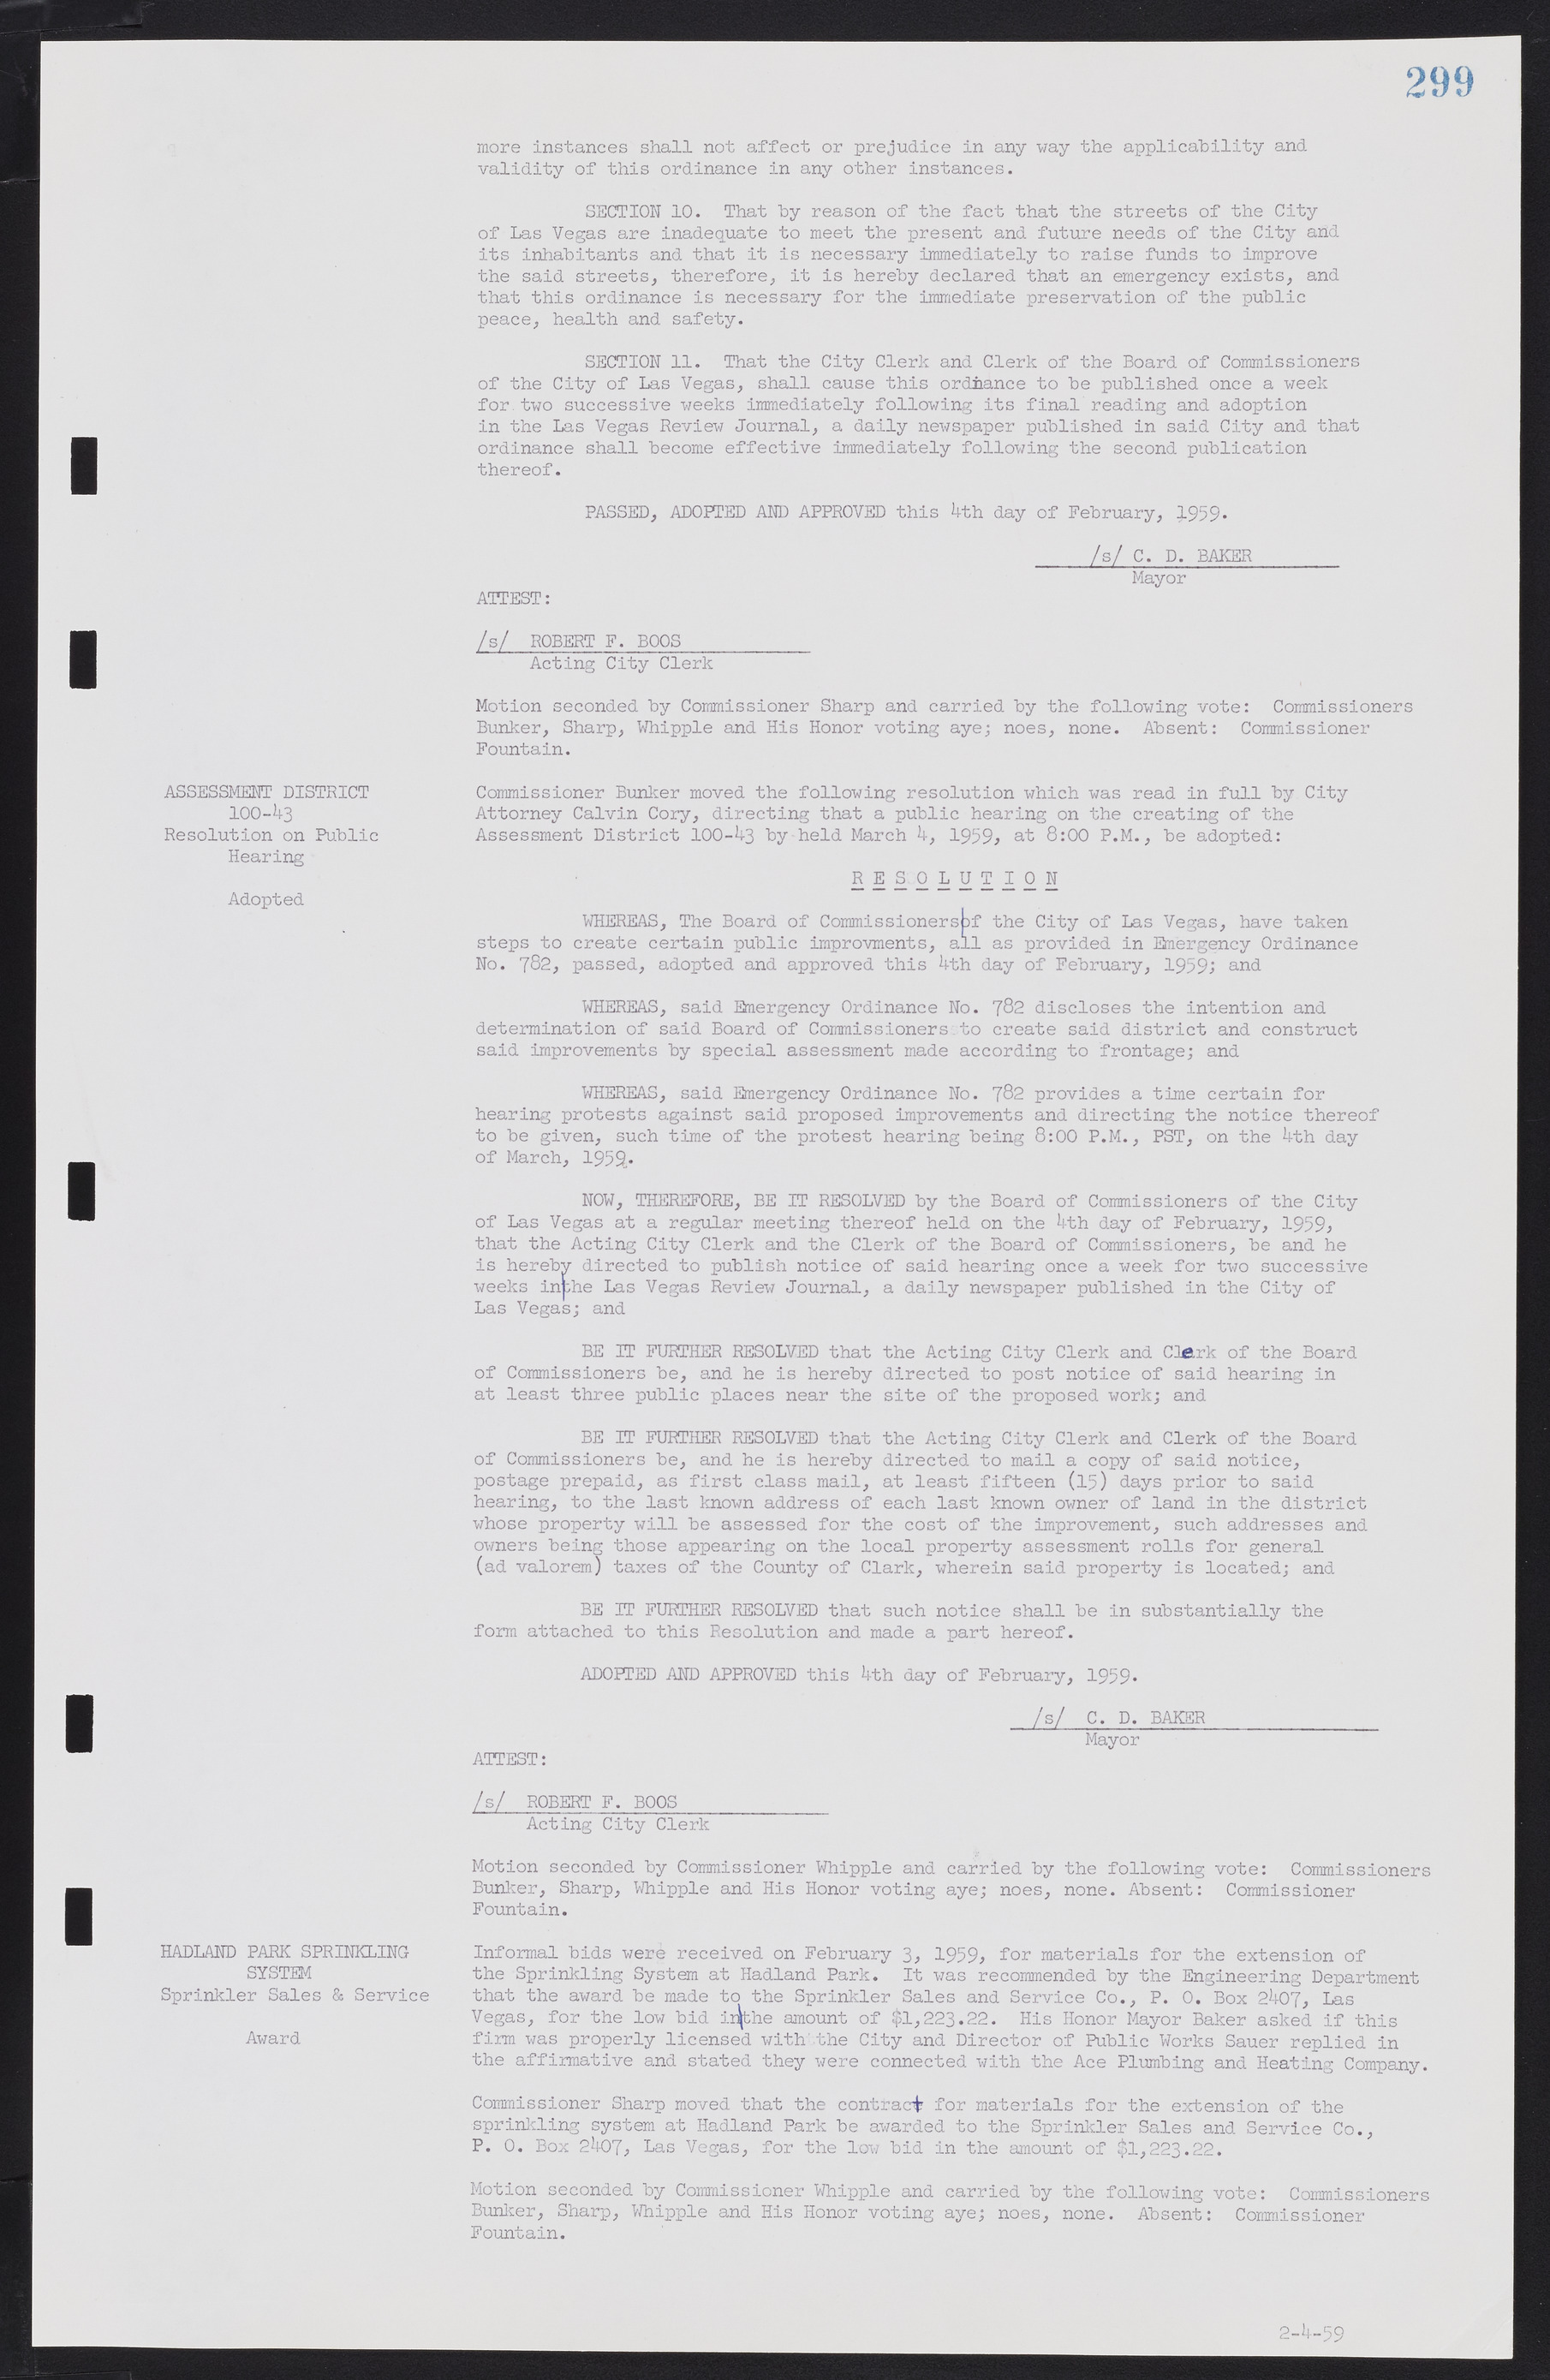 Las Vegas City Commission Minutes, November 20, 1957 to December 2, 1959, lvc000011-307